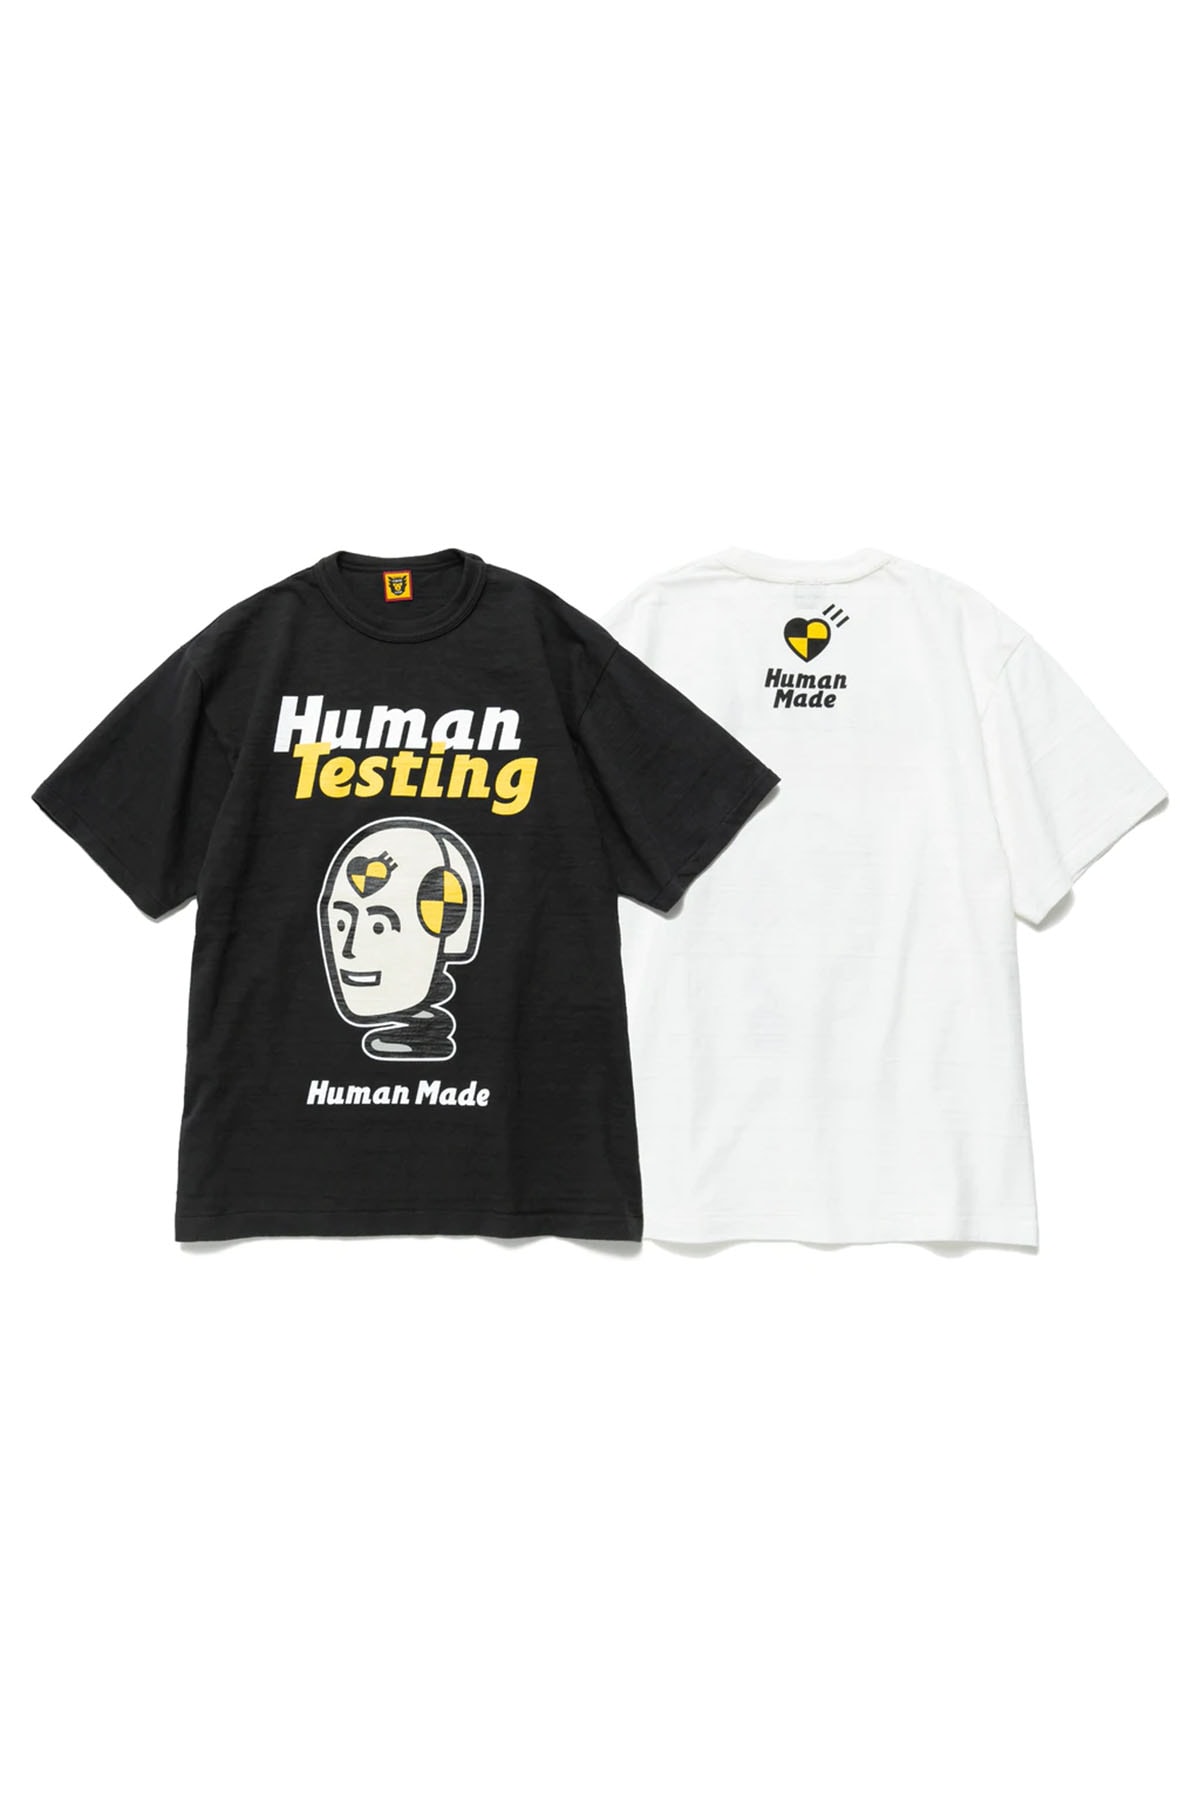 Human Made x A$AP Rocky 首個聯乘系列「Human Testing」正式登場